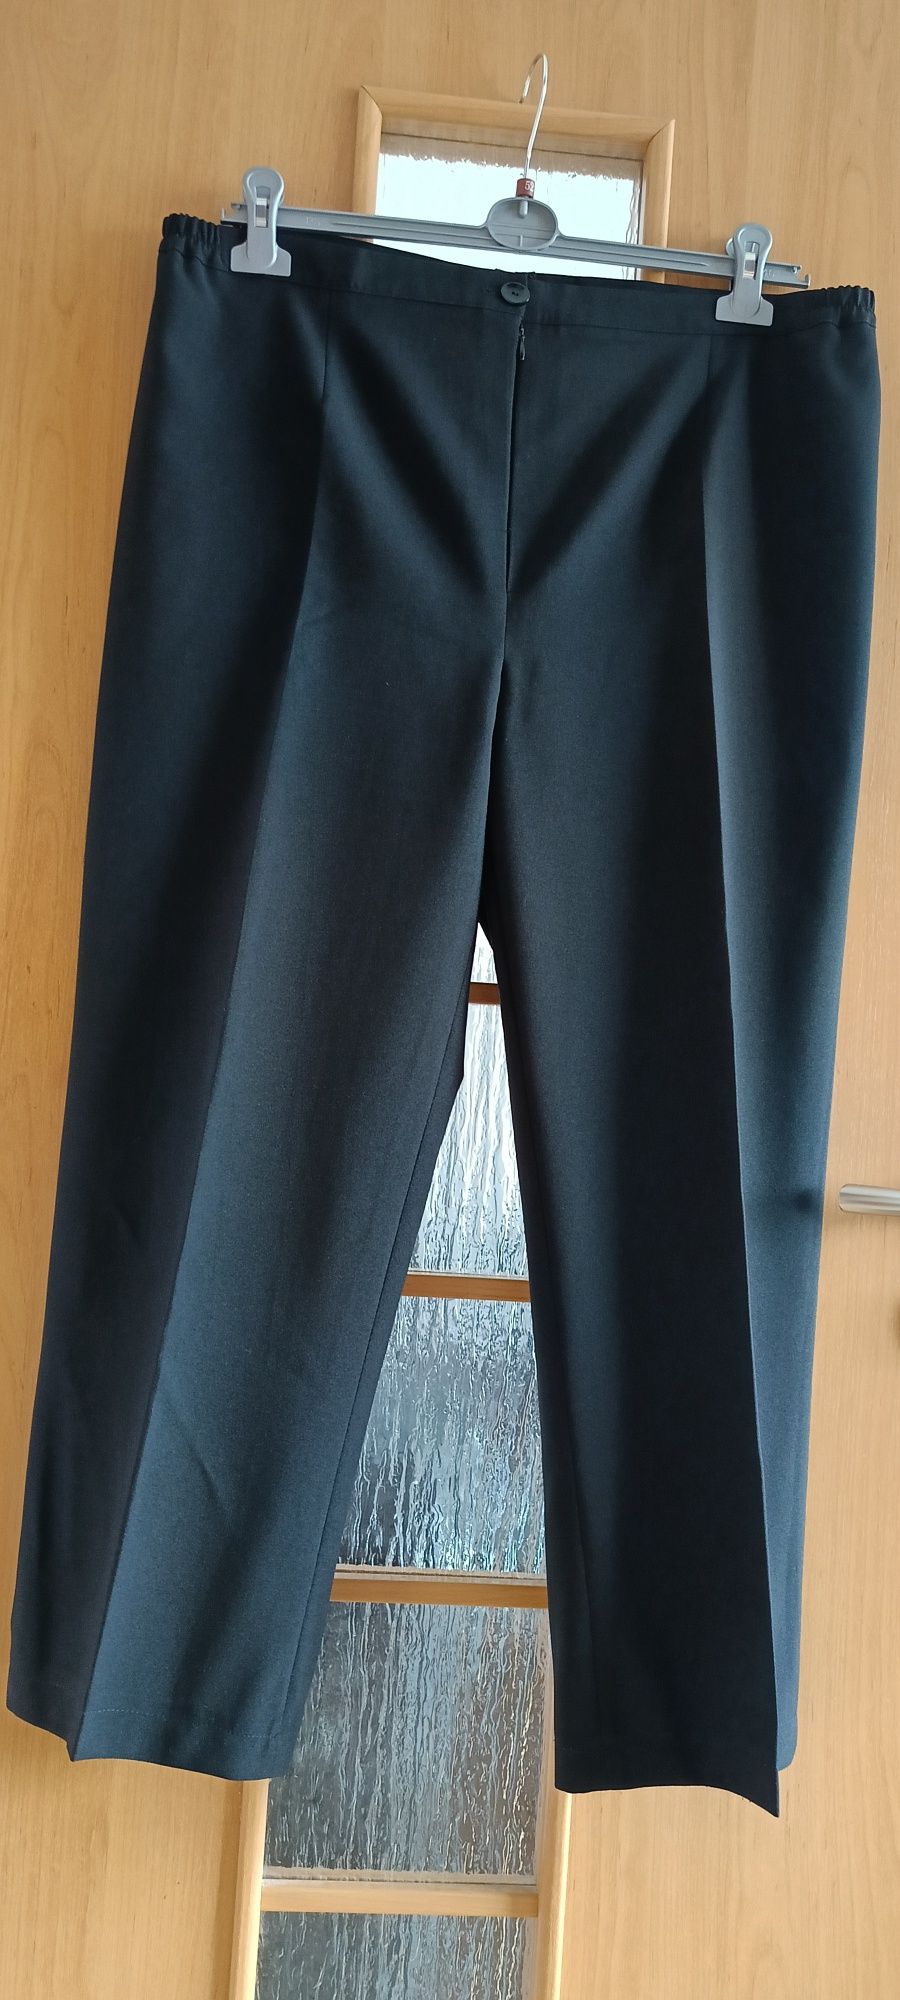 Spodnie 46/48/50, eleganckie spodnie garniturowe